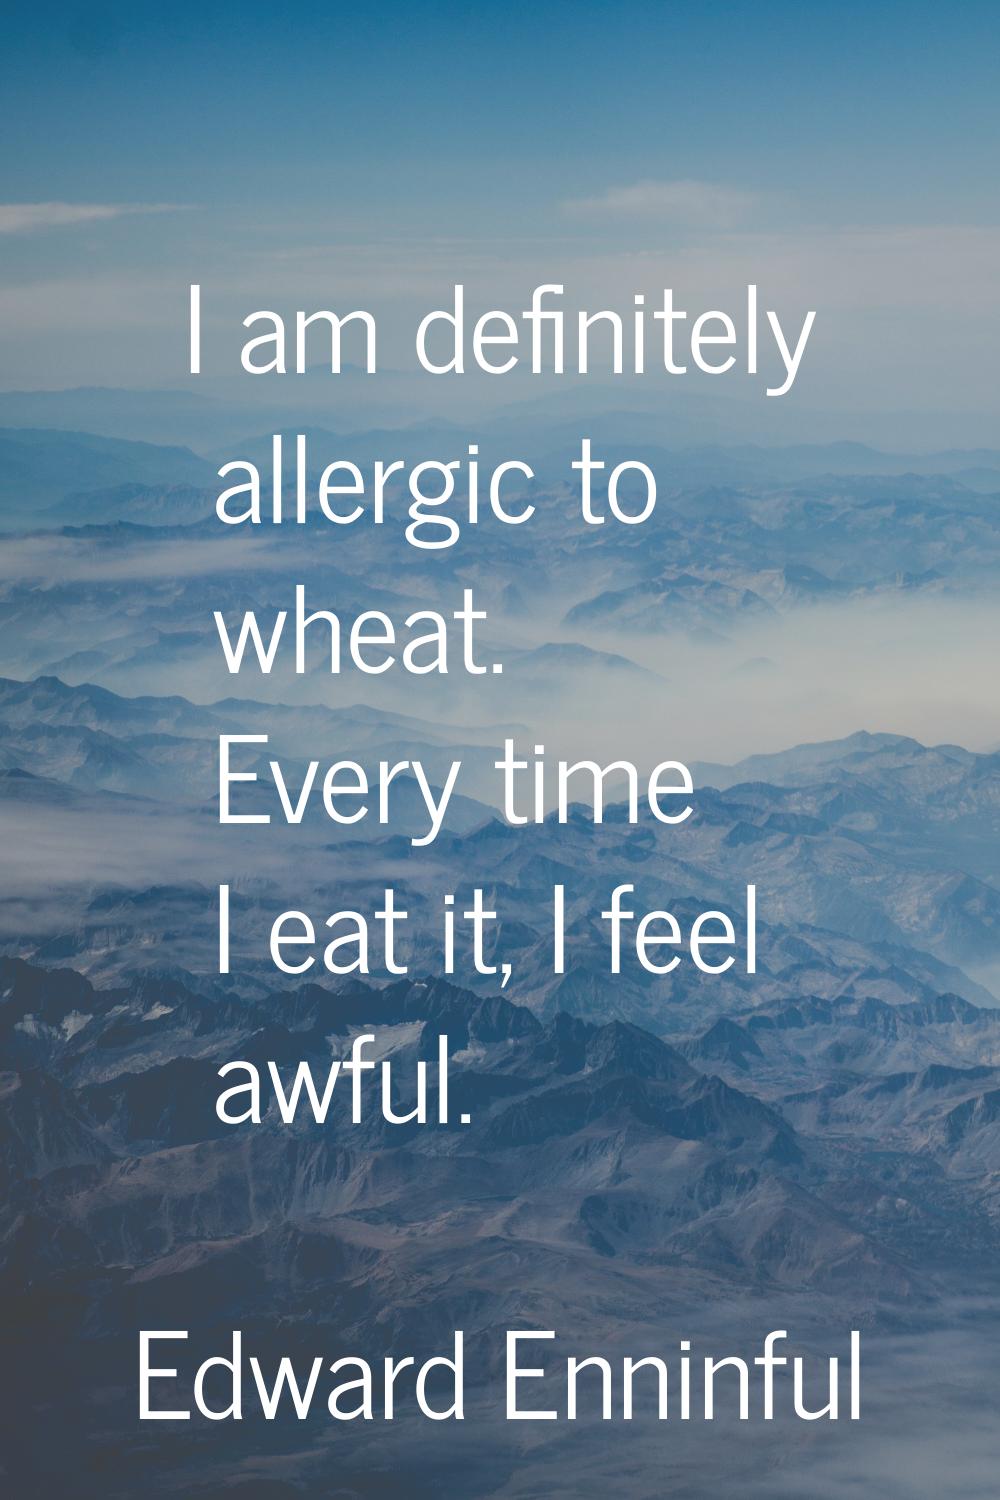 I am definitely allergic to wheat. Every time I eat it, I feel awful.